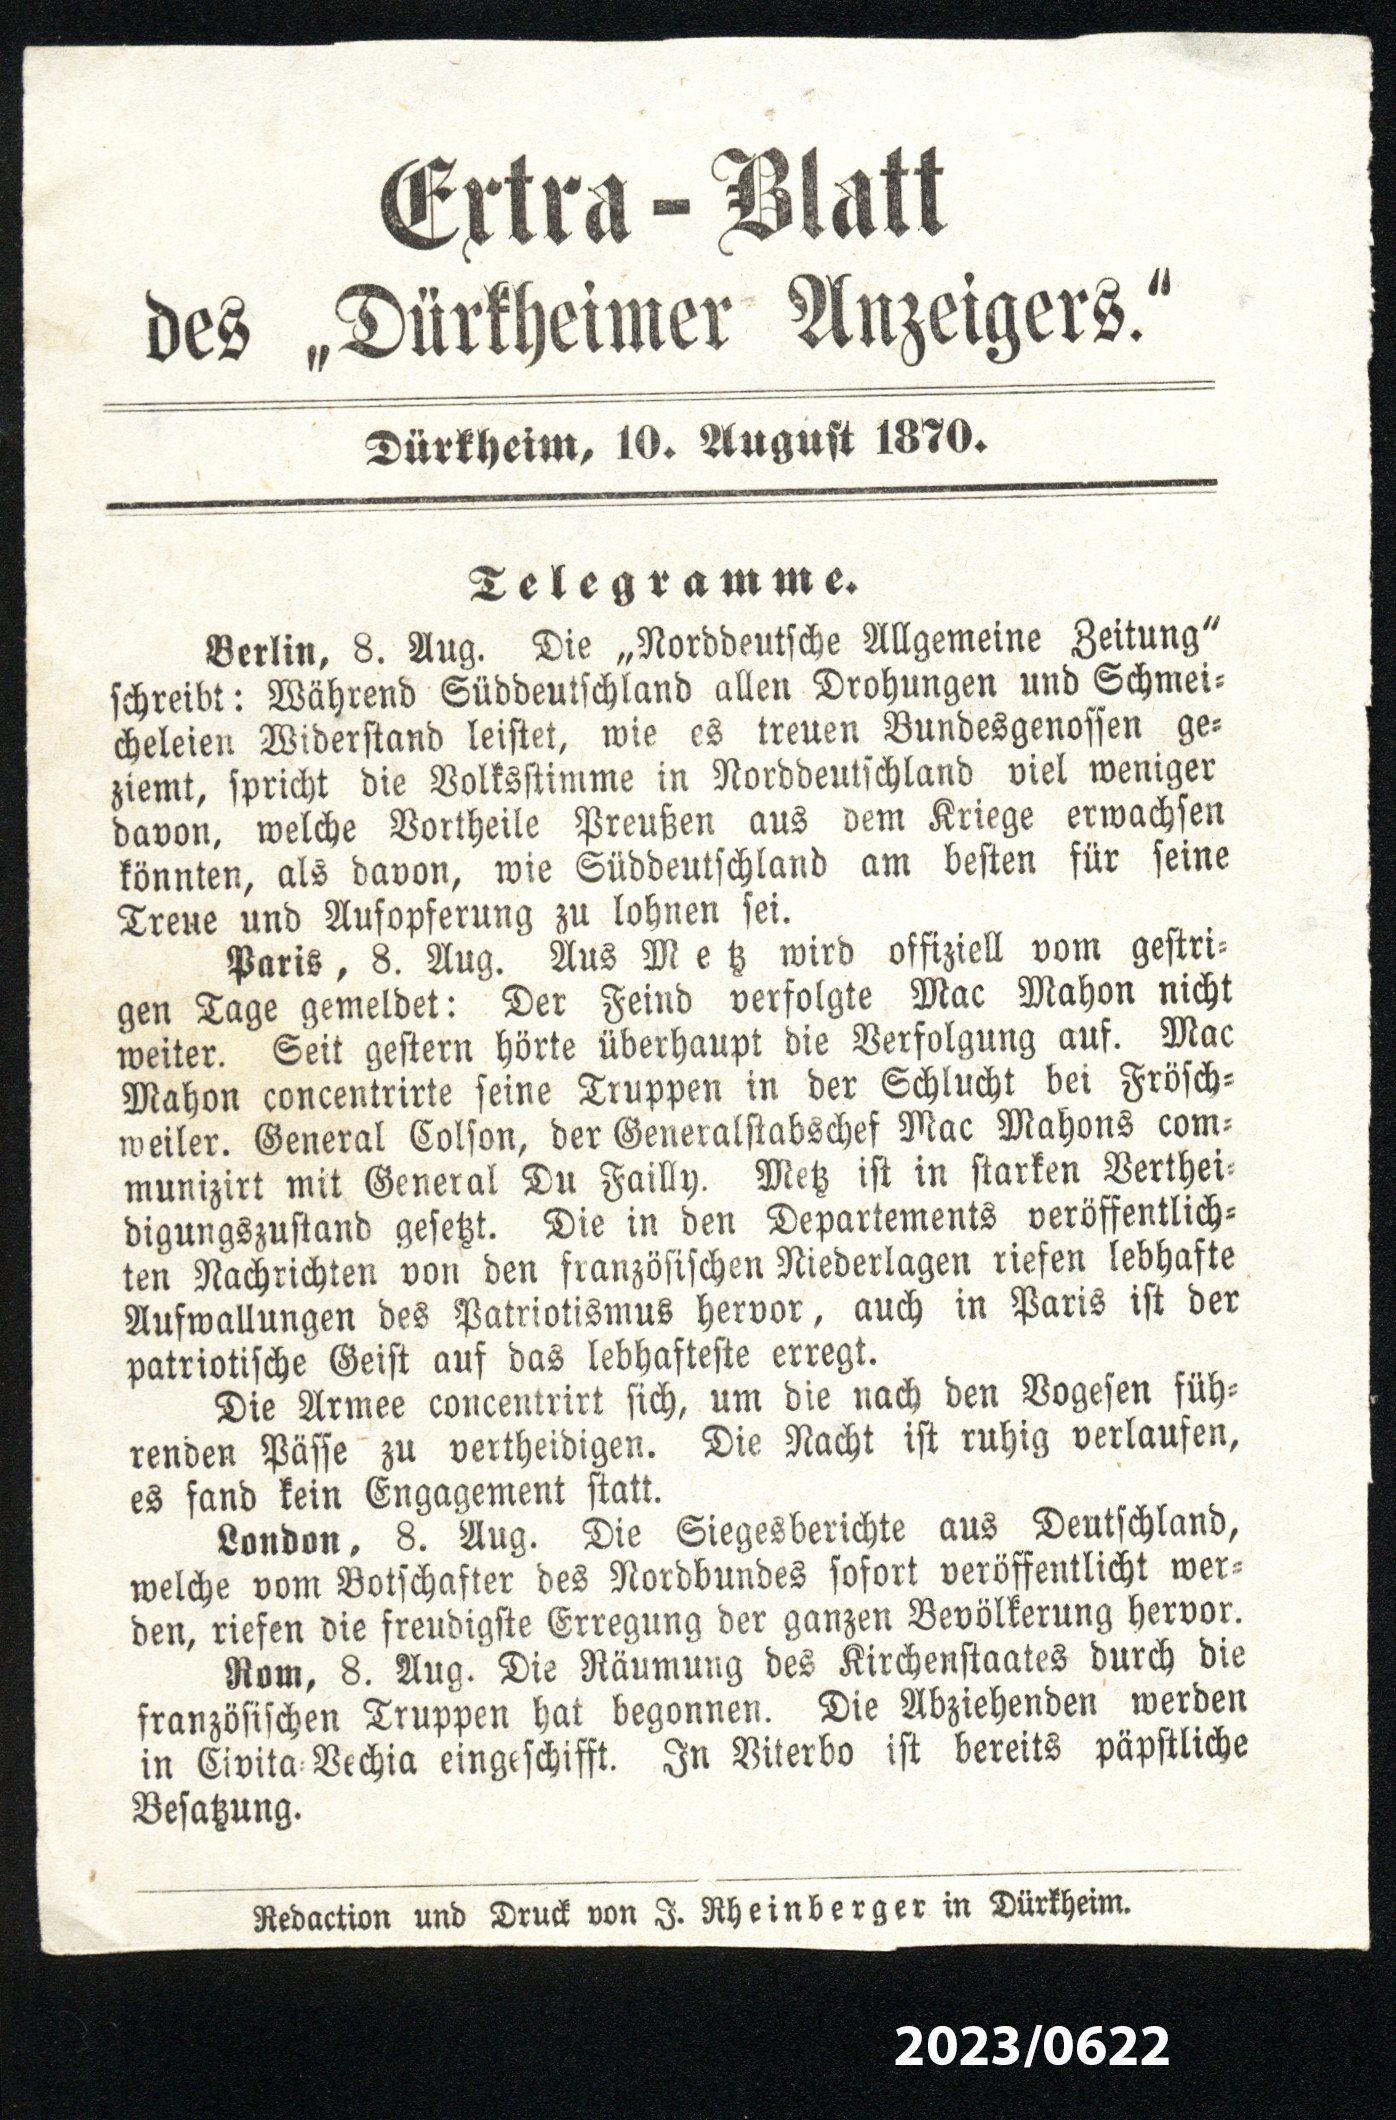 Extra-Blatt des "Dürkheimer Anzeigers" 10.8.1870 (Stadtmuseum Bad Dürkheim im Kulturzentrum Haus Catoir CC BY-NC-SA)